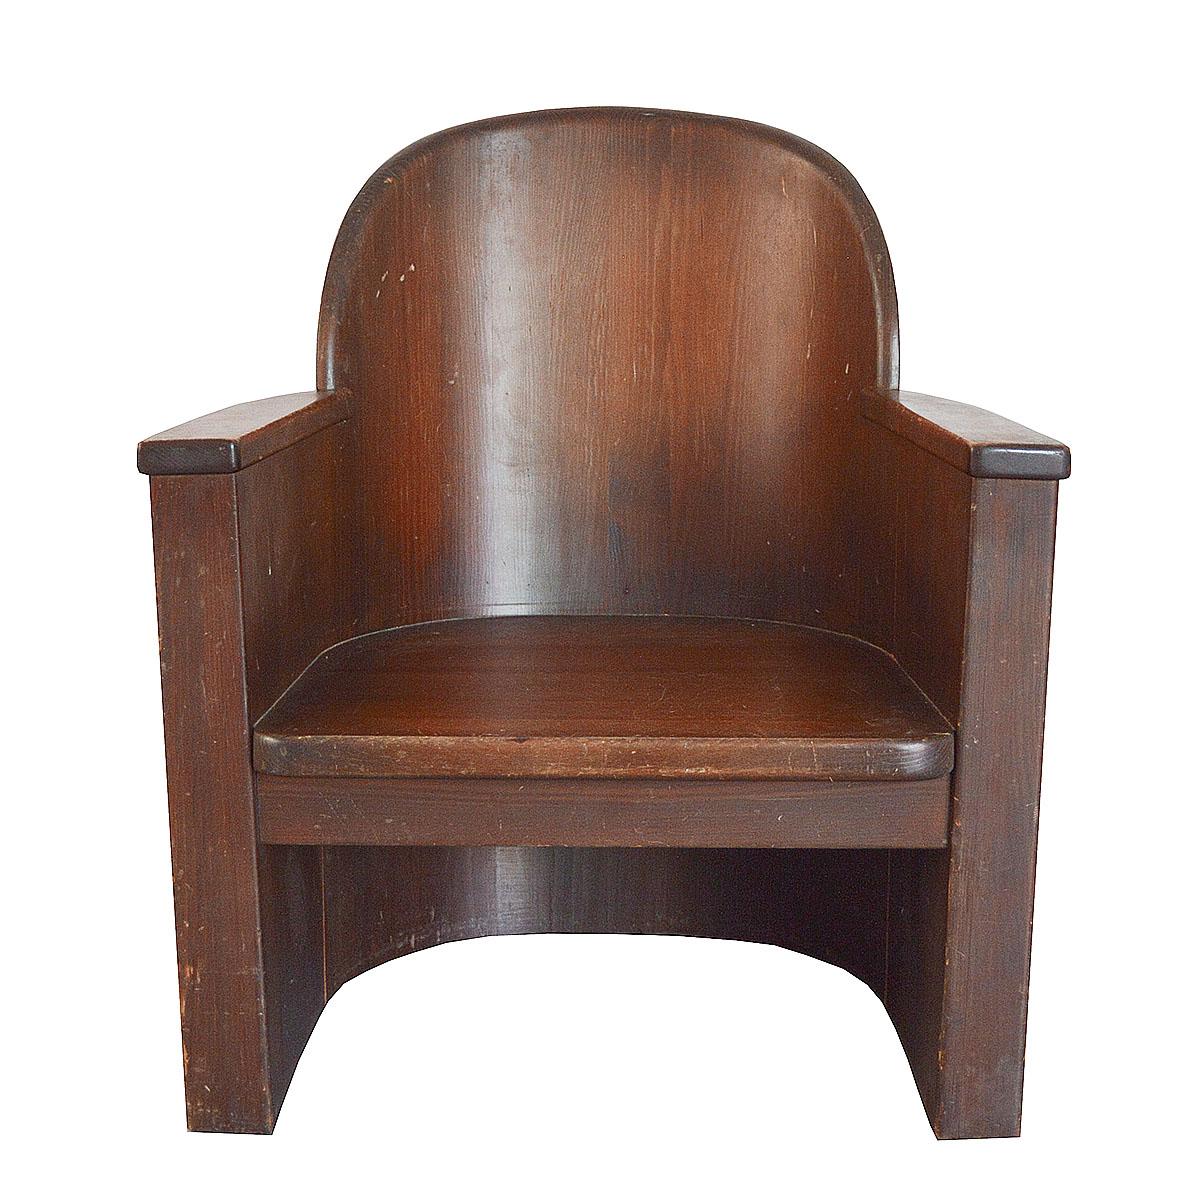 Scandinavian Modern Scandinavian Pine and Iron Lounge Chair by Åby Möbelfabrik, Sweden, 1930s For Sale